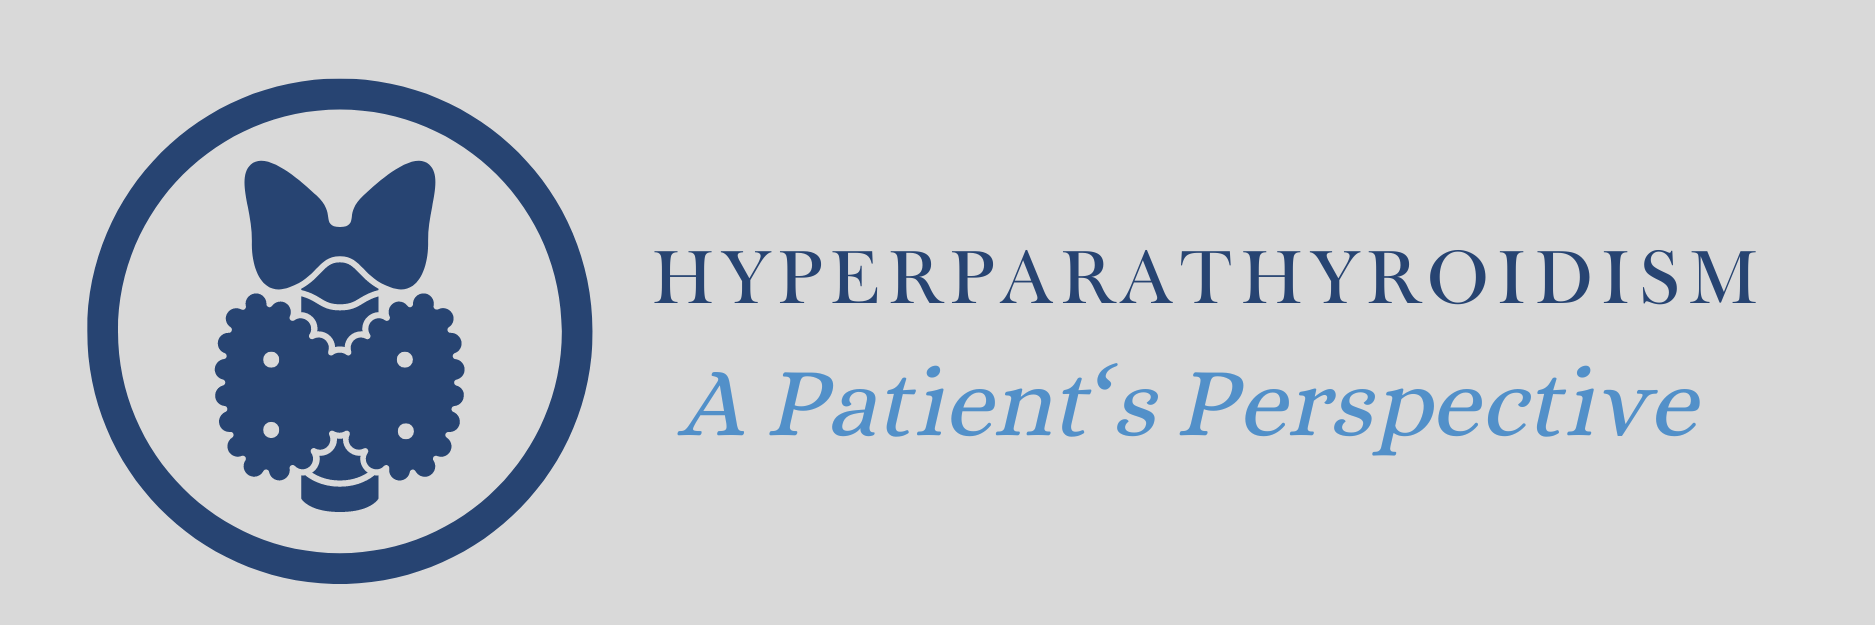 Hyperparathyroidism: A Patient's Perspective